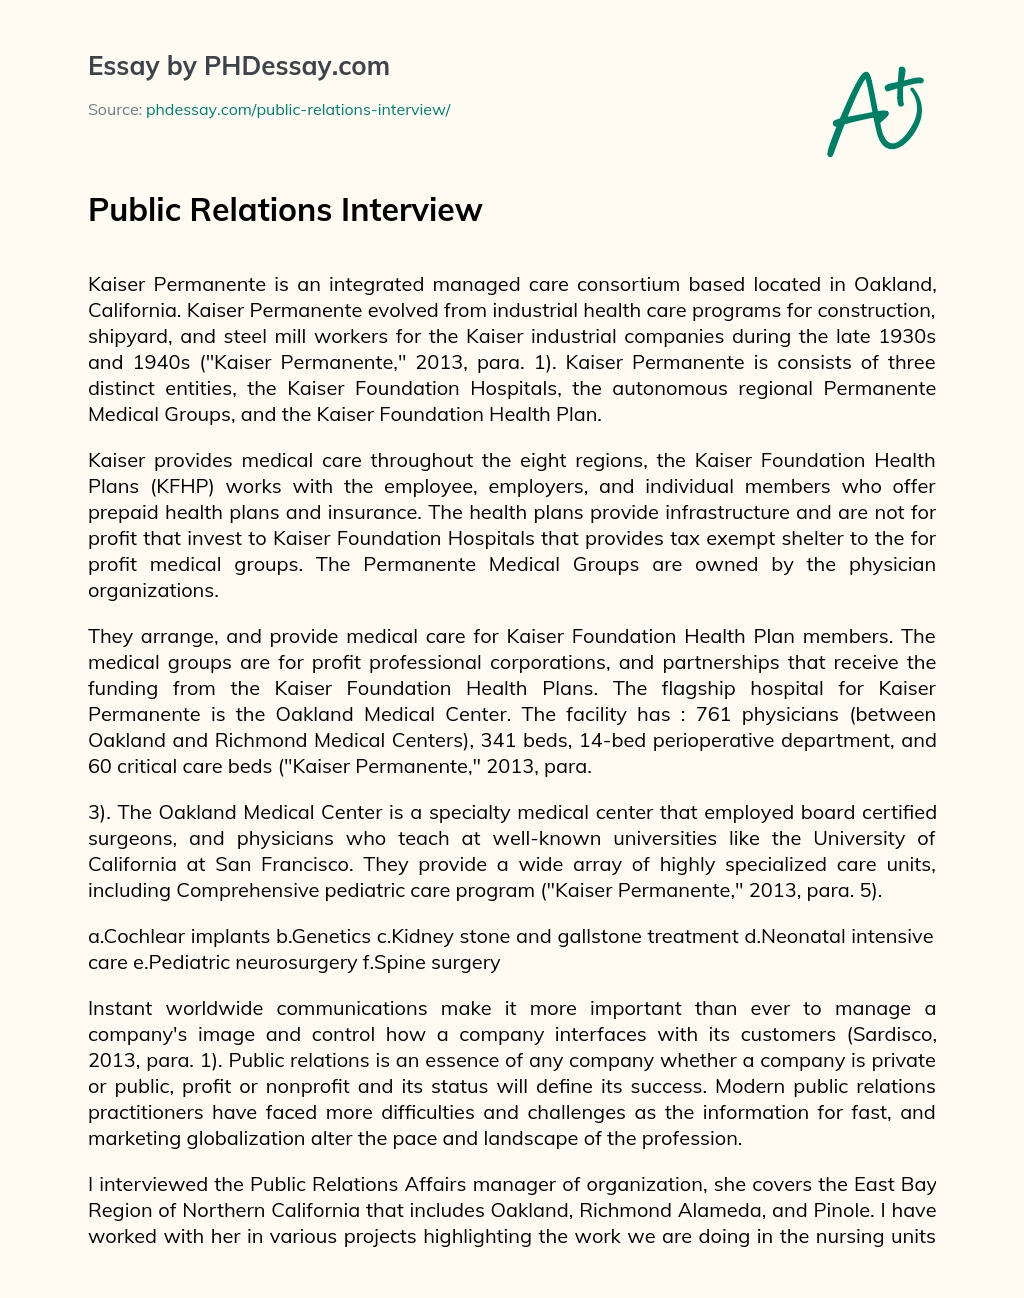 Public Relations Interview essay